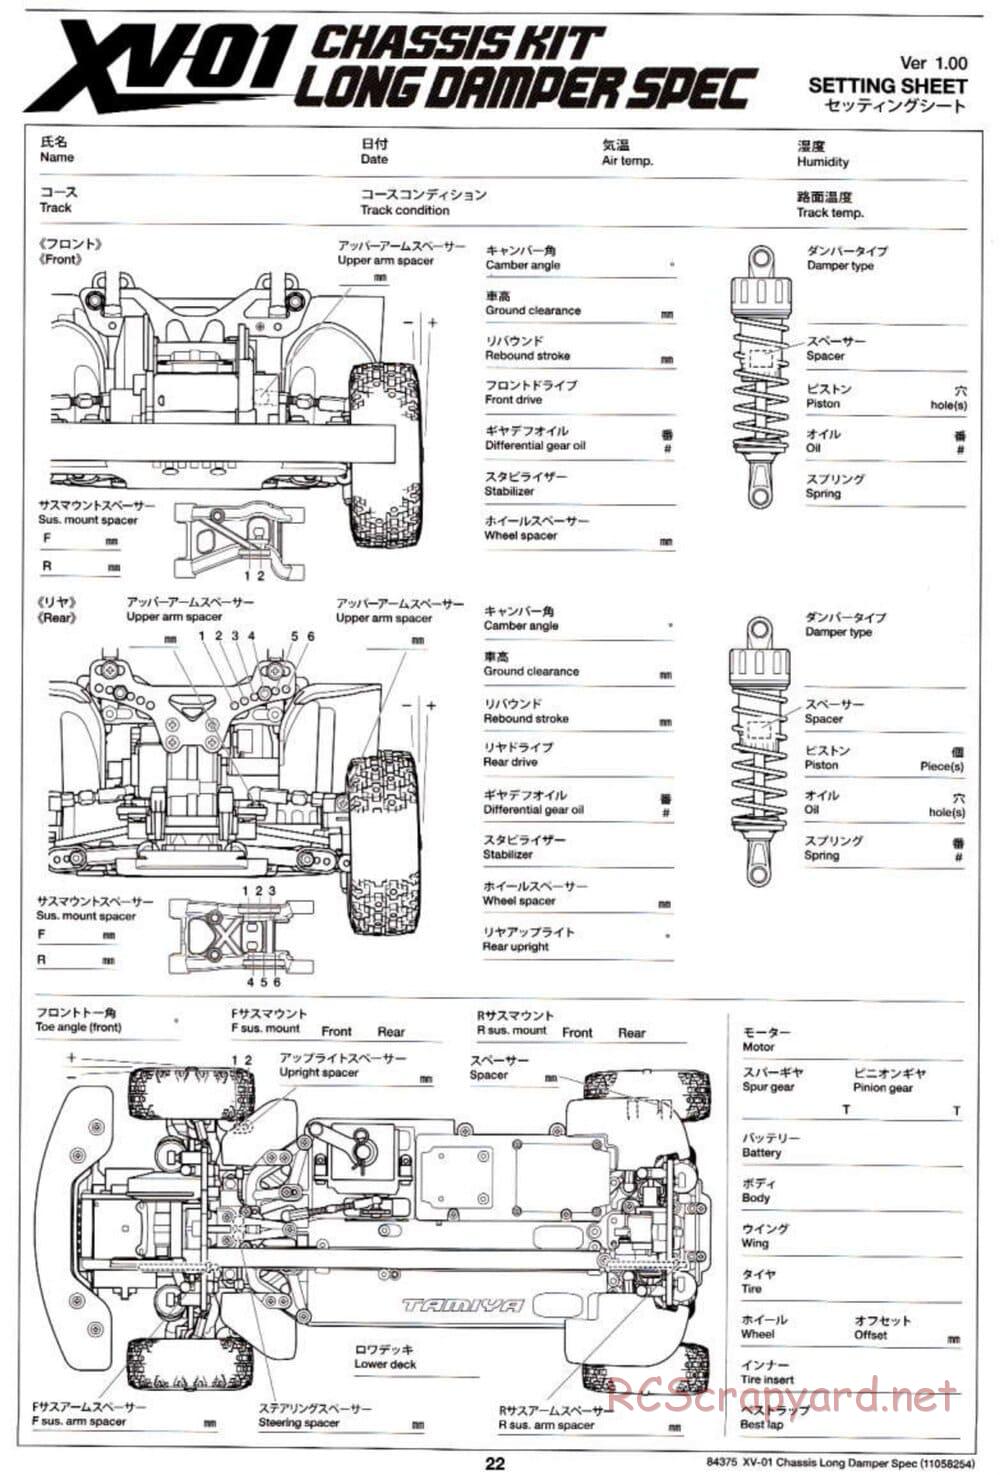 Tamiya - XV-01 Long Damper Spec Chassis - Manual - Page 22